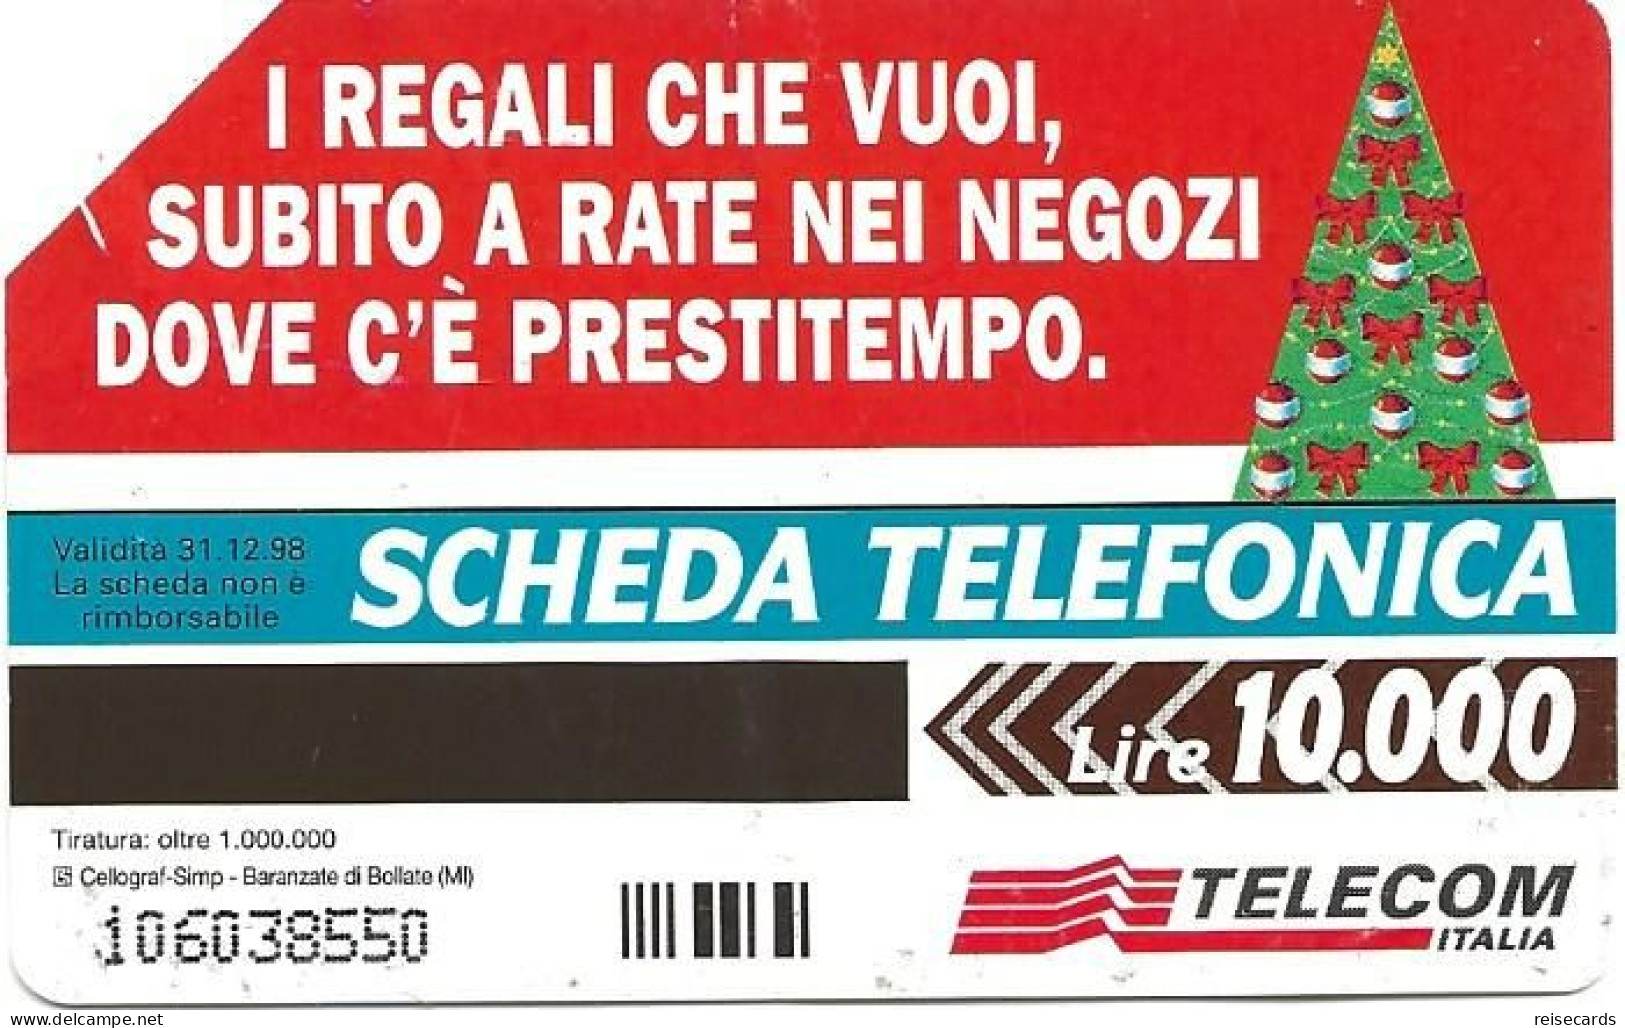 Italy: Telecom Italia - Buon Natale - Publiques Publicitaires